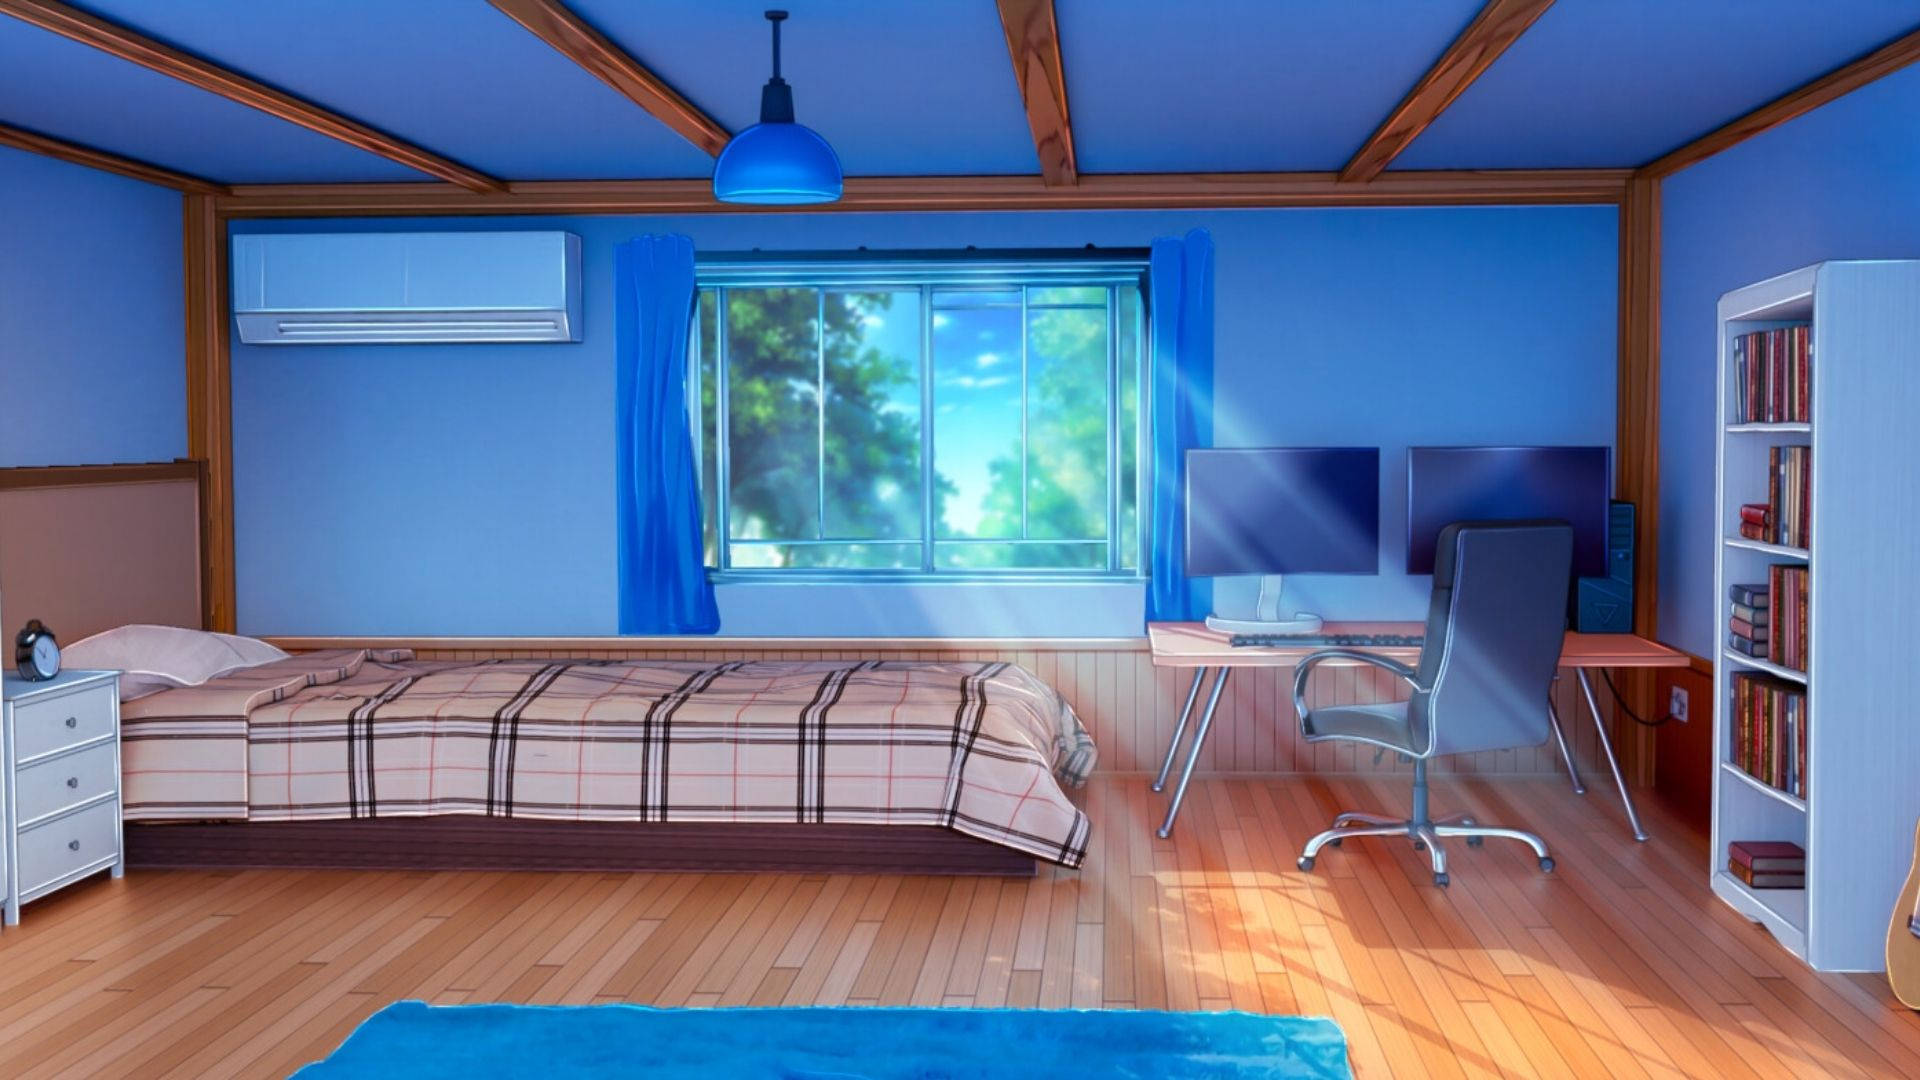 Anime Room Wallpapers